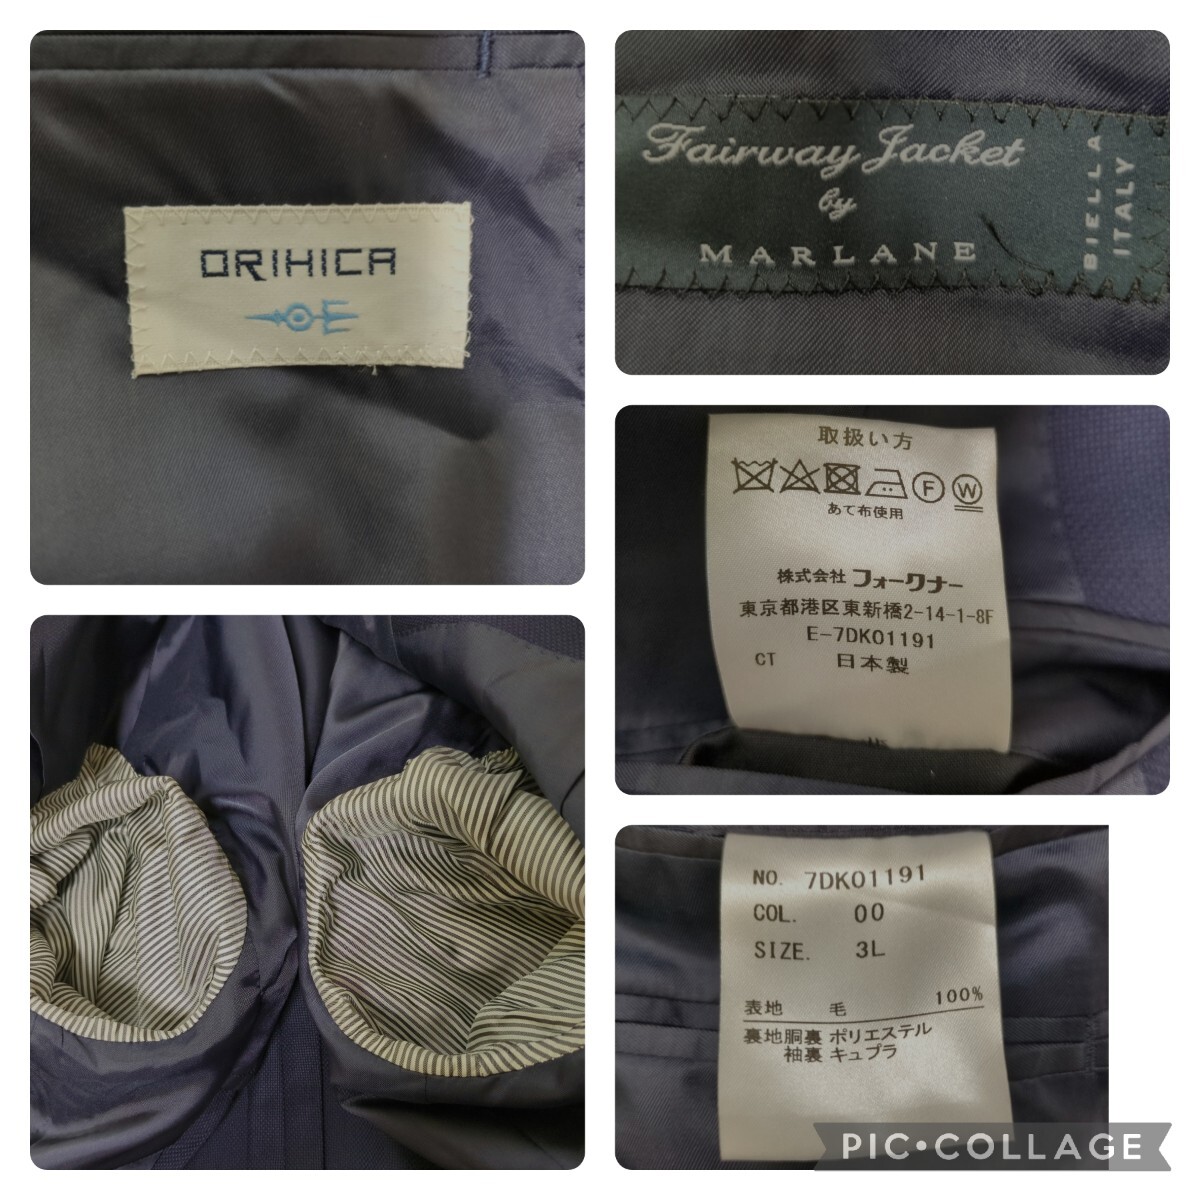 ORIHICA/オリヒカ イタリア生地 3Lサイズ 金ボタン テーラードジャケット/ブレザー 紺ブレ アウター 濃紺ネイビーカラー 紳士服 メンズの画像8